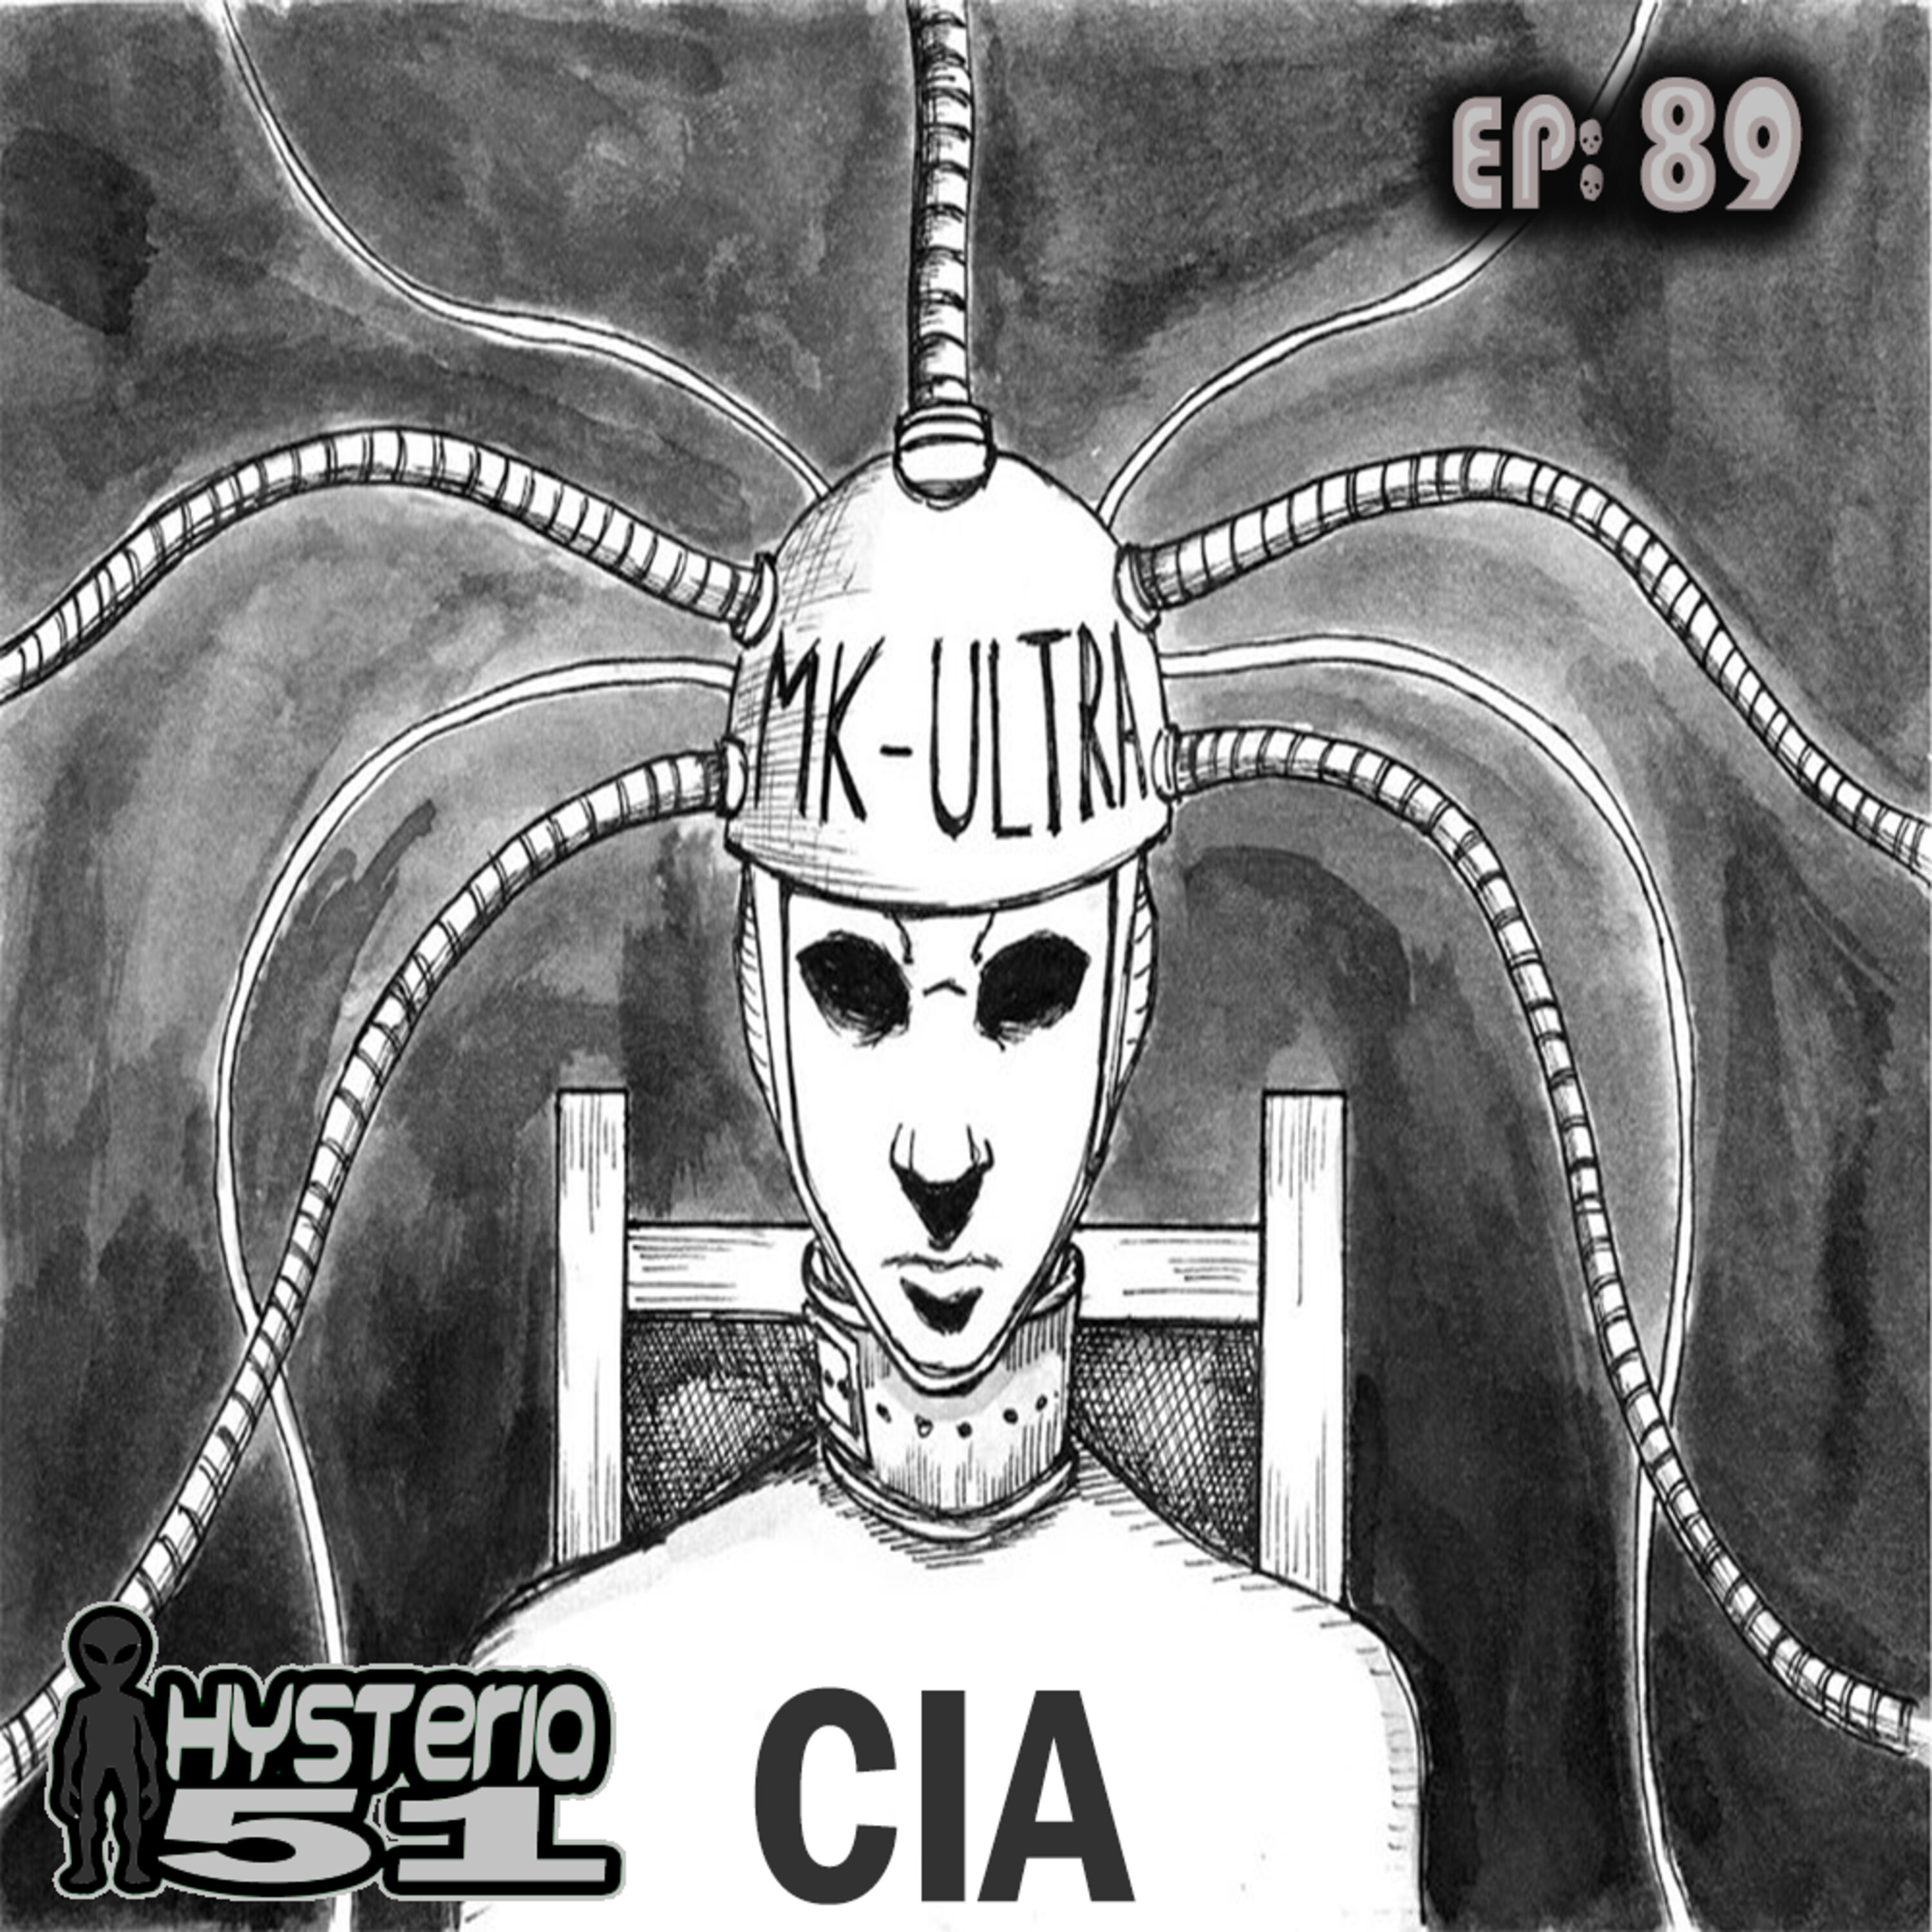 MK ULTRA: The CIA's Mind Control Program | 89